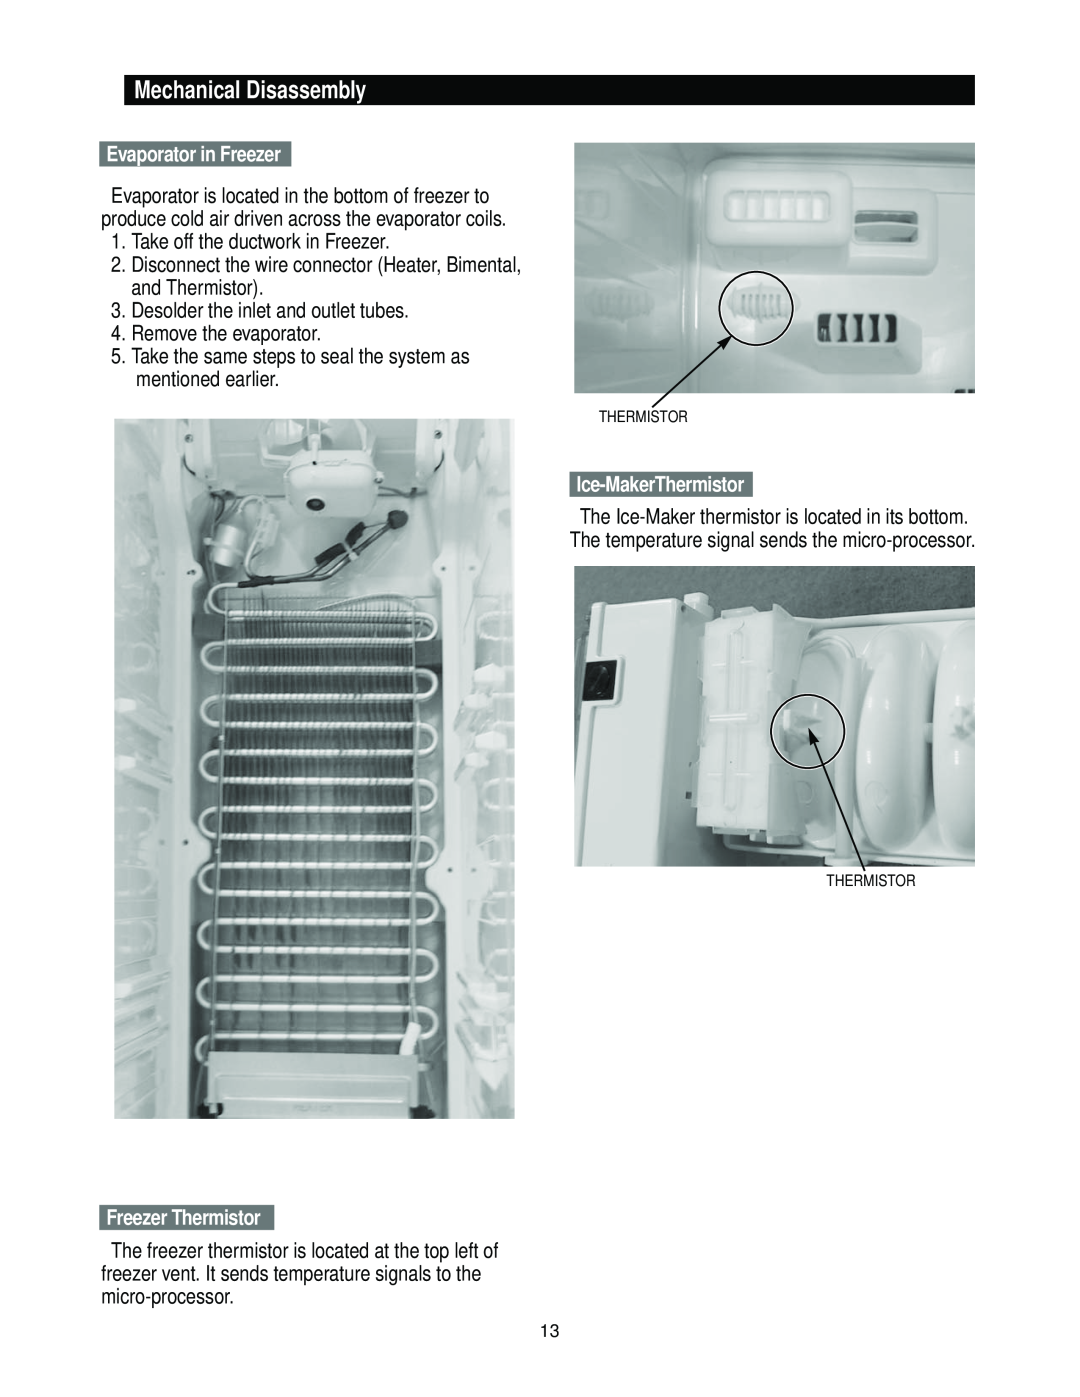 Samsung RS2*3* manual Evaporator in Freezer, Ice-MakerThermistor, Freezer Thermistor, Mechanical Disassembly 